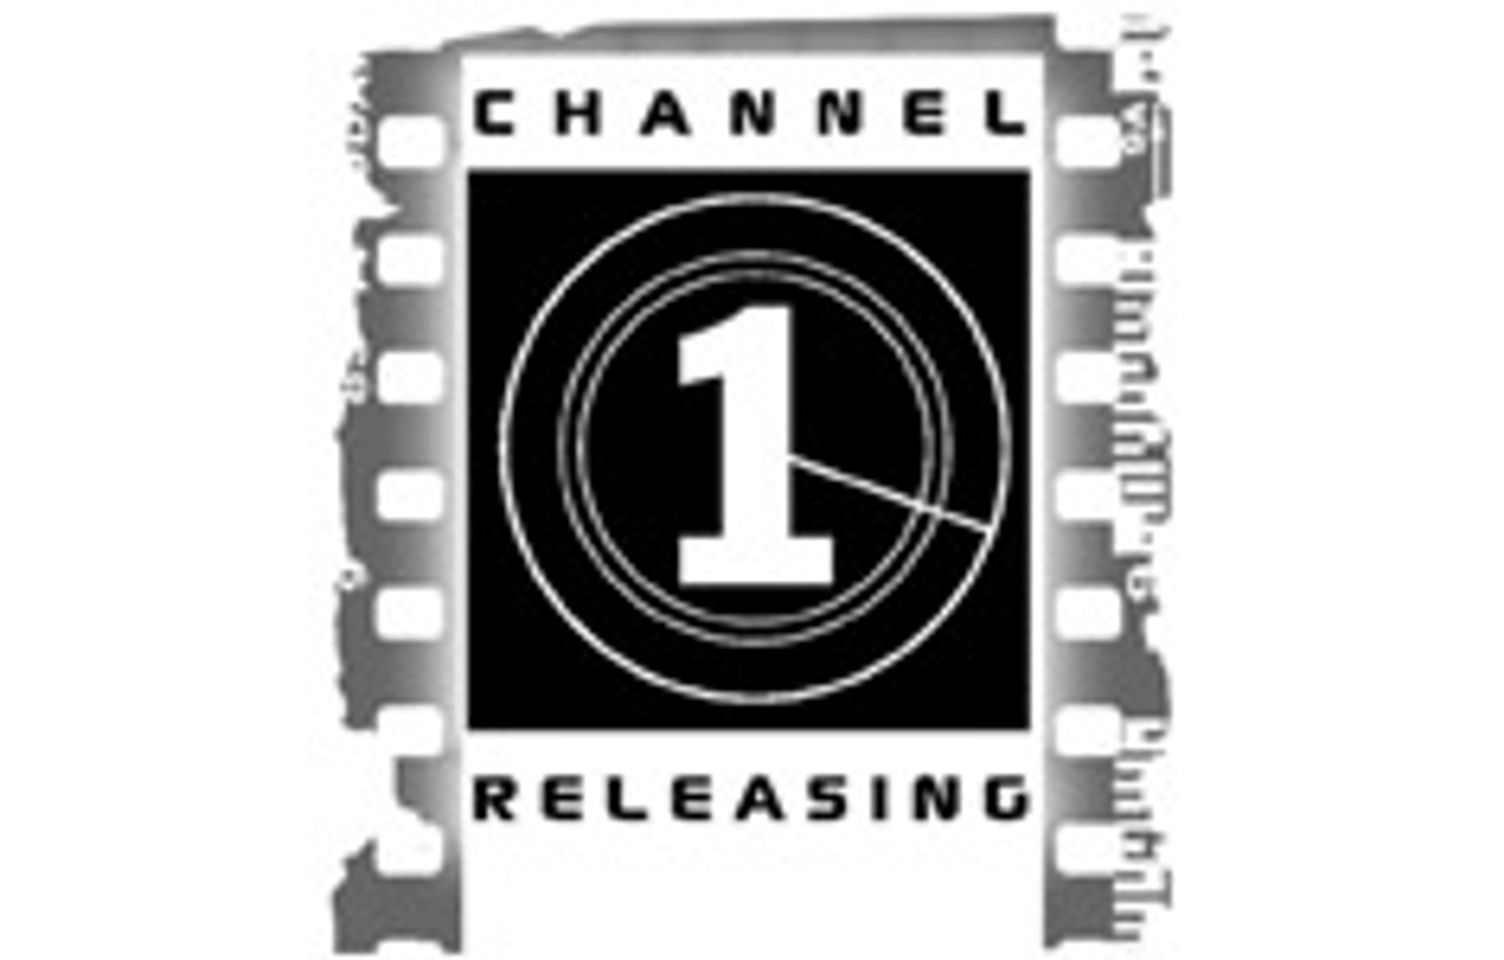 December 2006 Company Profile: Channel 1 Releasing